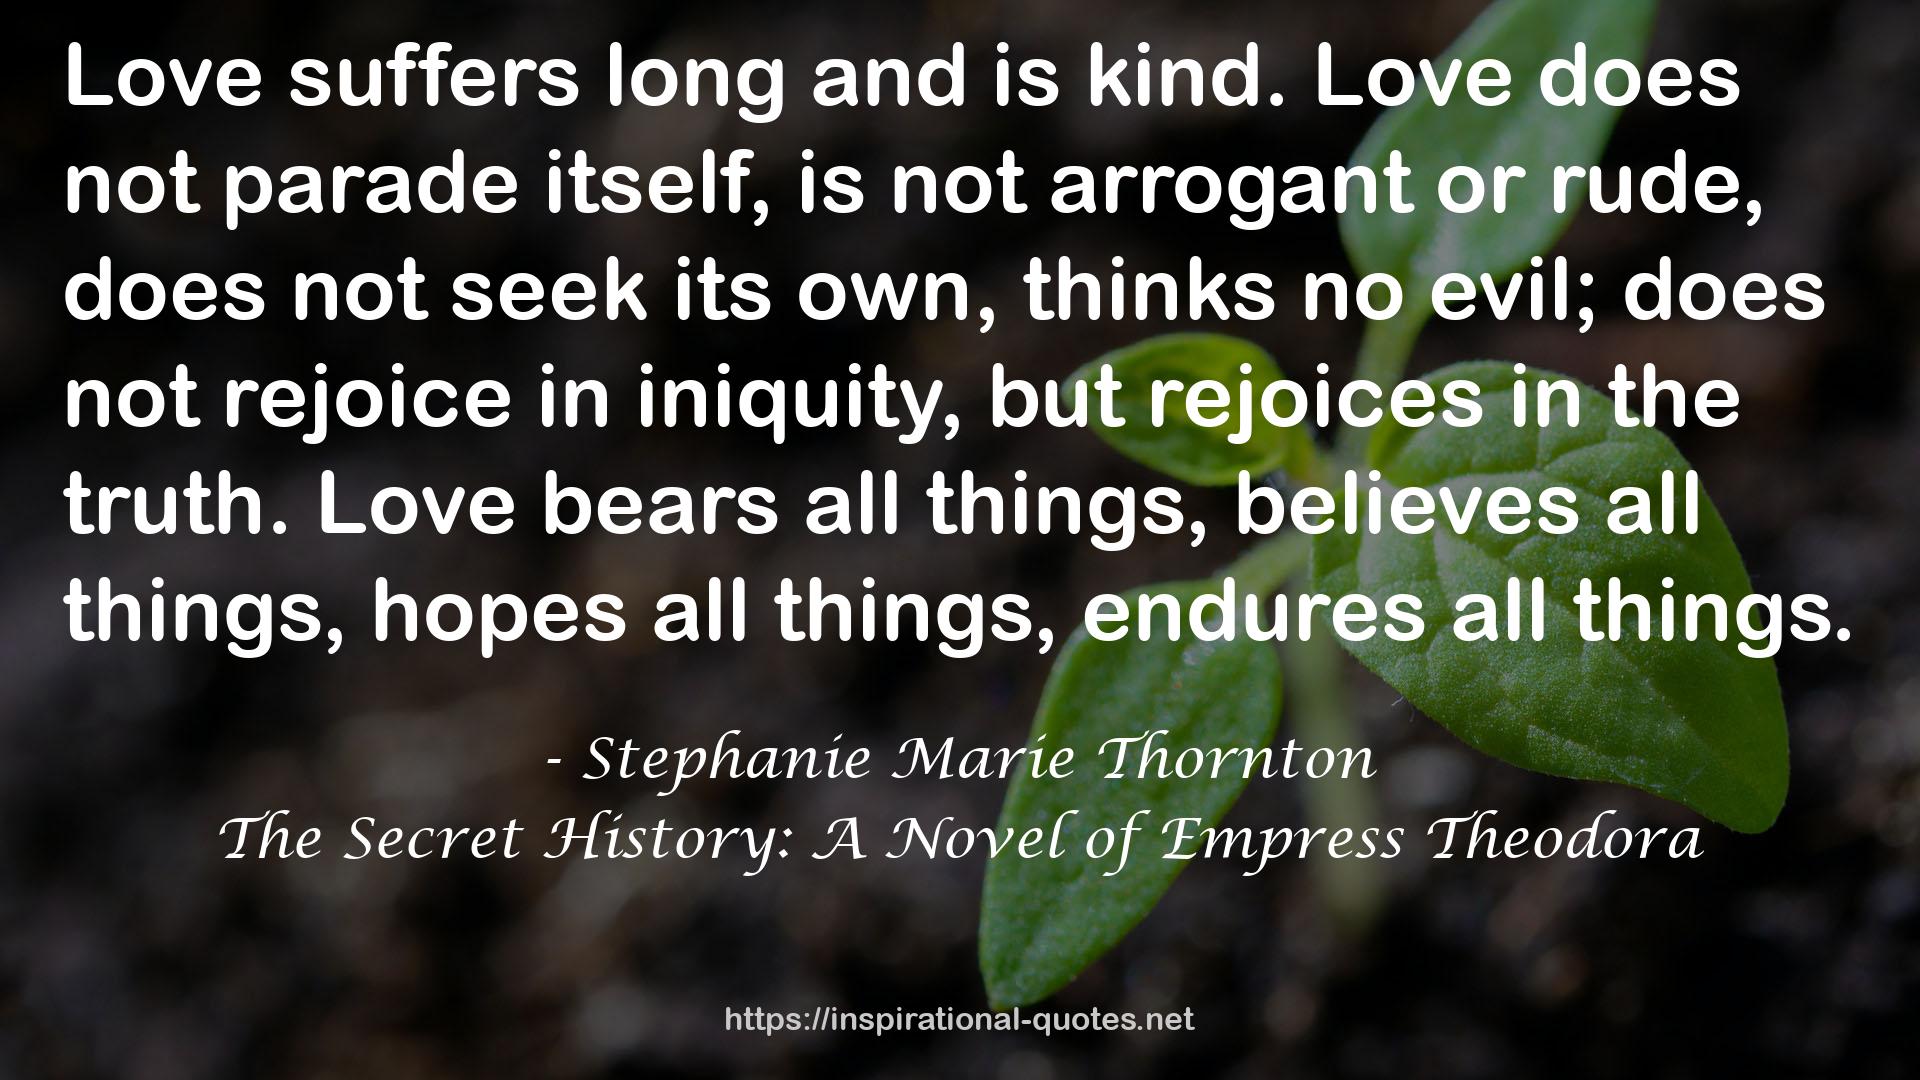 The Secret History: A Novel of Empress Theodora QUOTES